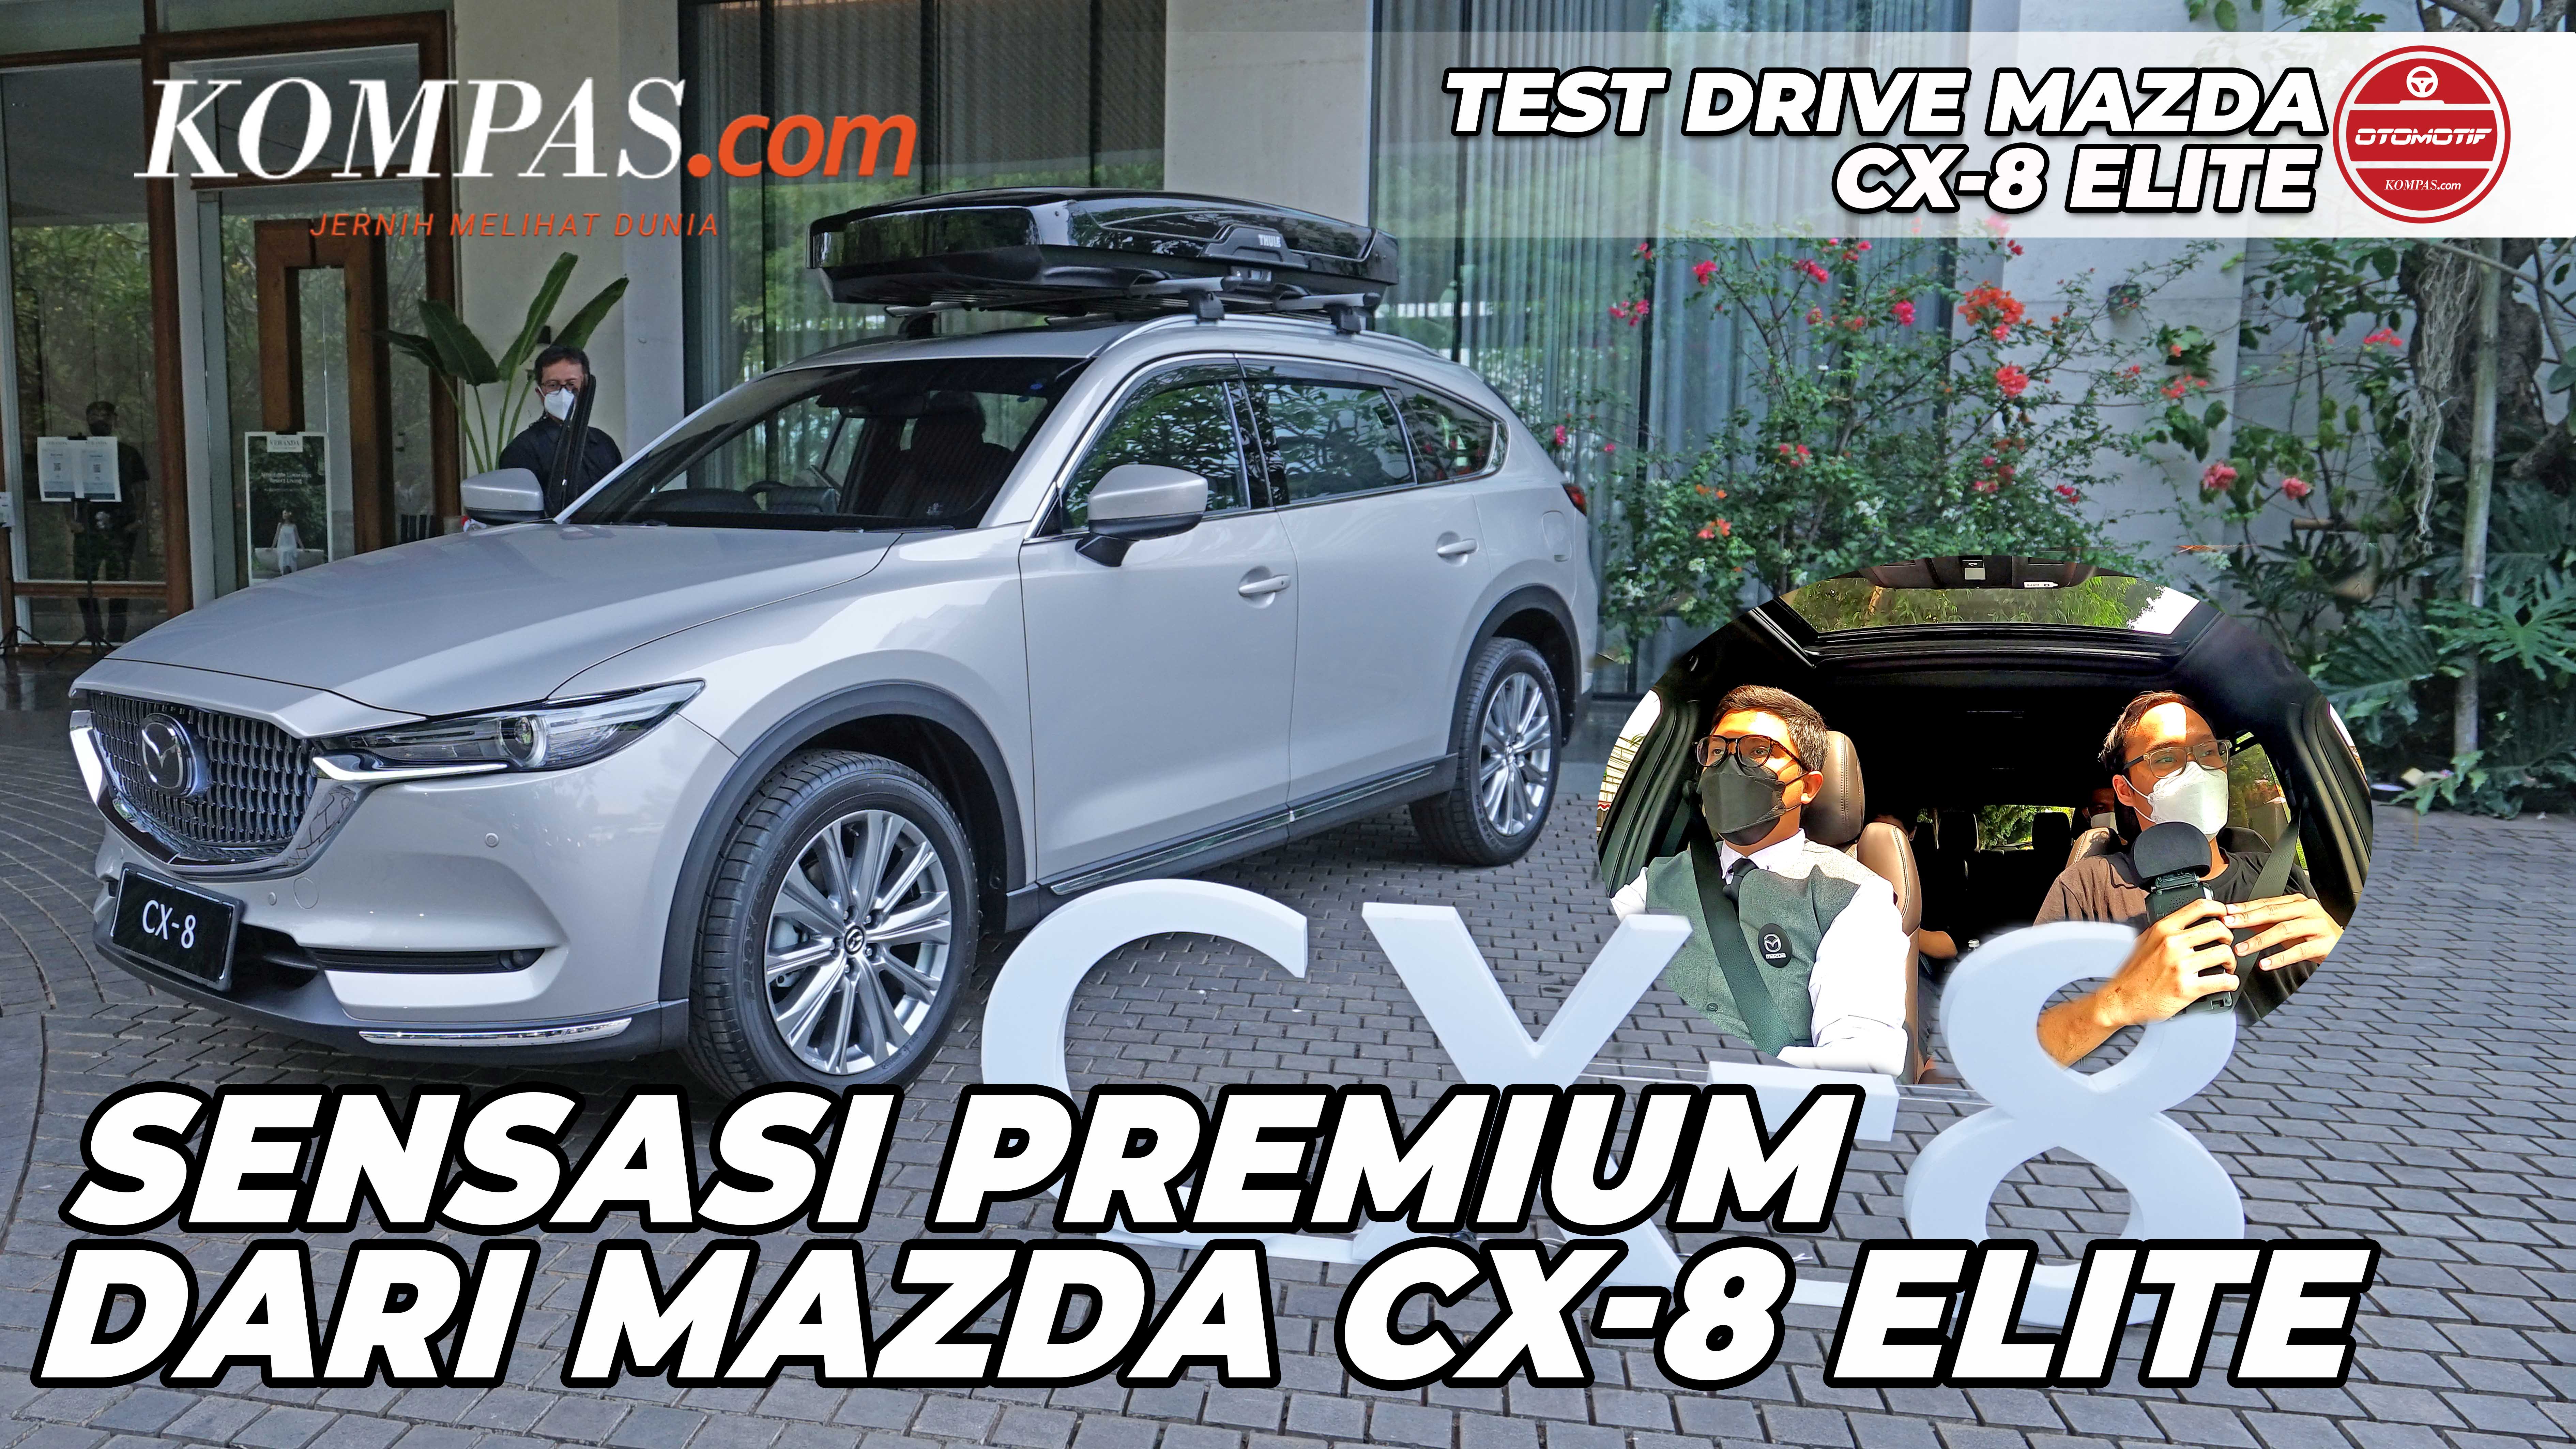 FIRST DRIVE | Mazda CX-8 Elite | Sensasi Premium Dari Mazda CX-8 Elite